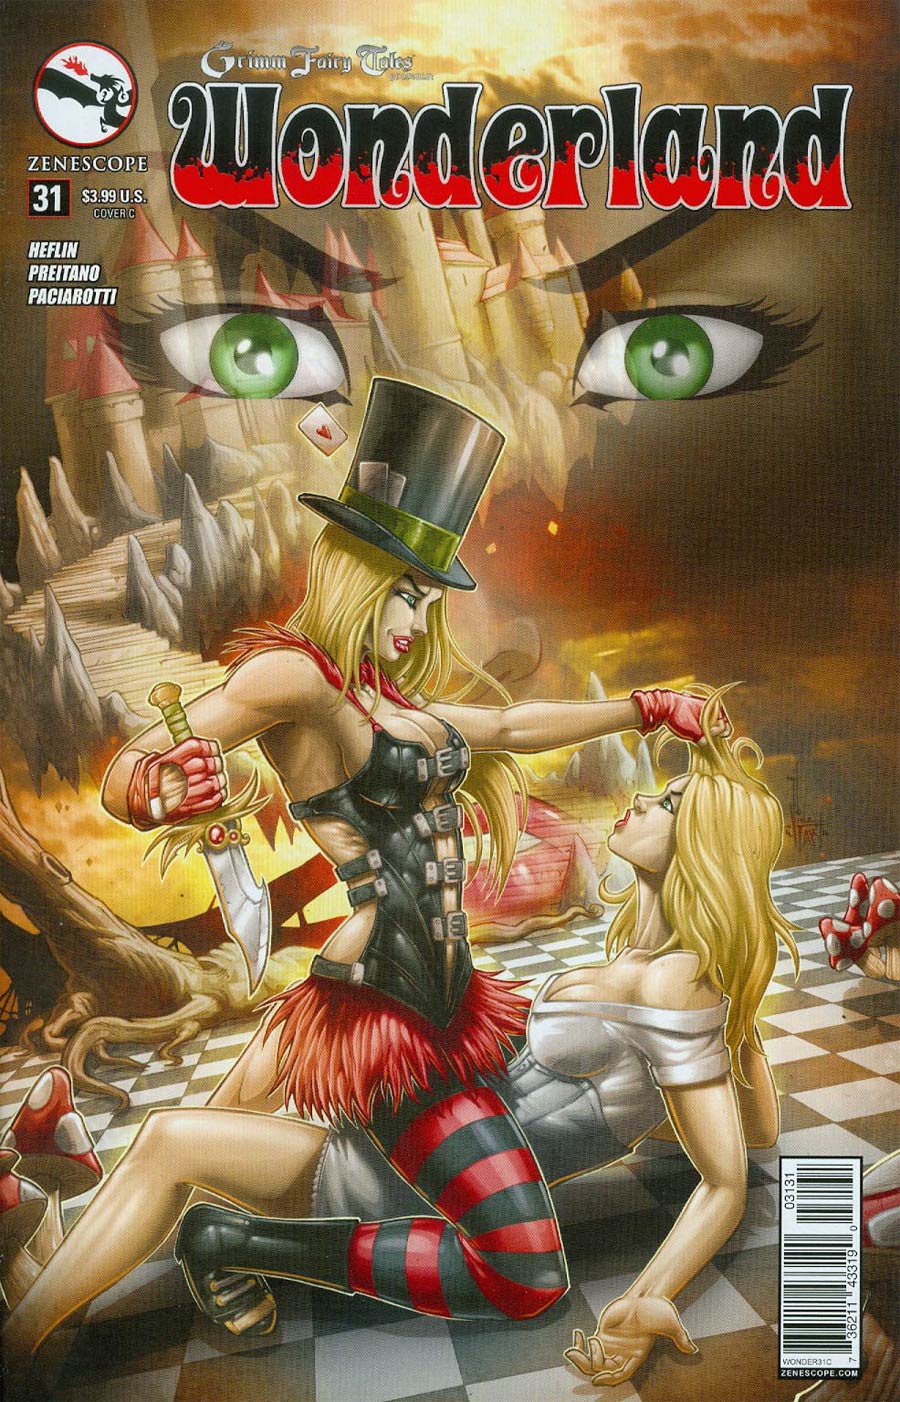 Grimm Fairy Tales Presents Wonderland Vol 2 #31 Cover C Vinz El Tabanas